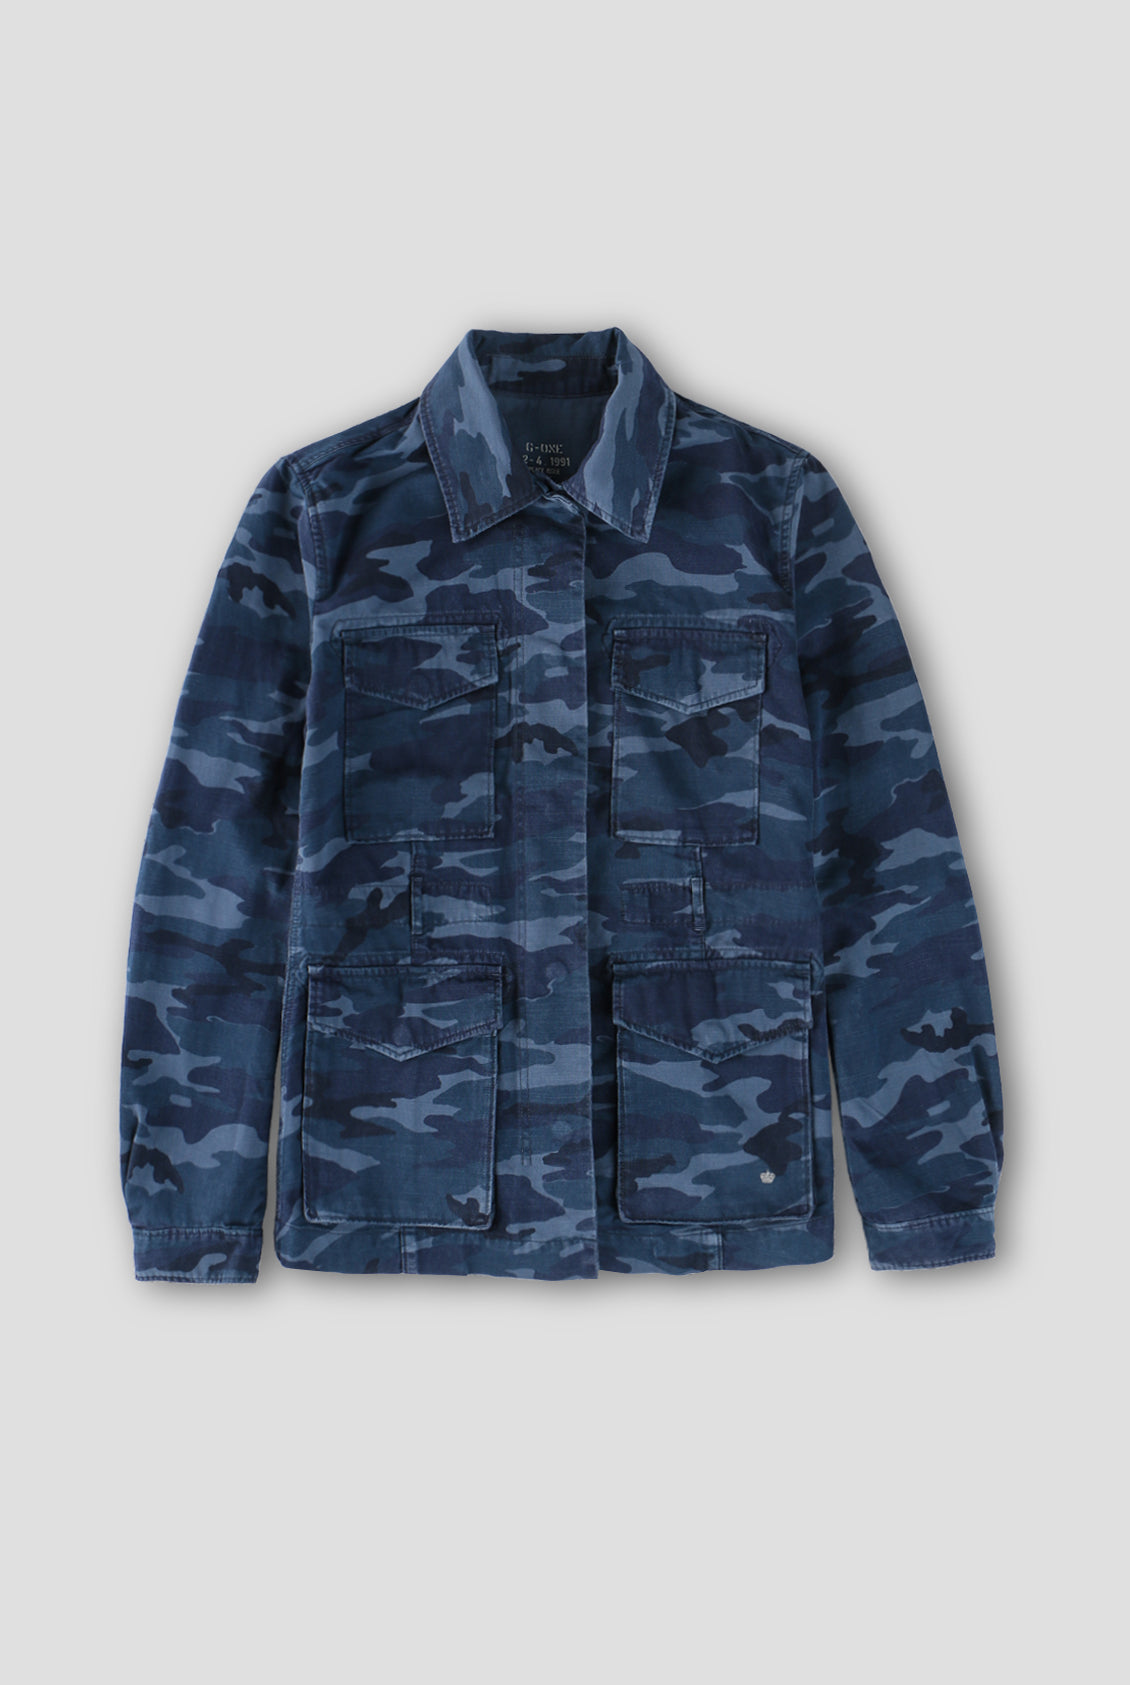 Navy Blue Camo Jacket on Sale | bellvalefarms.com